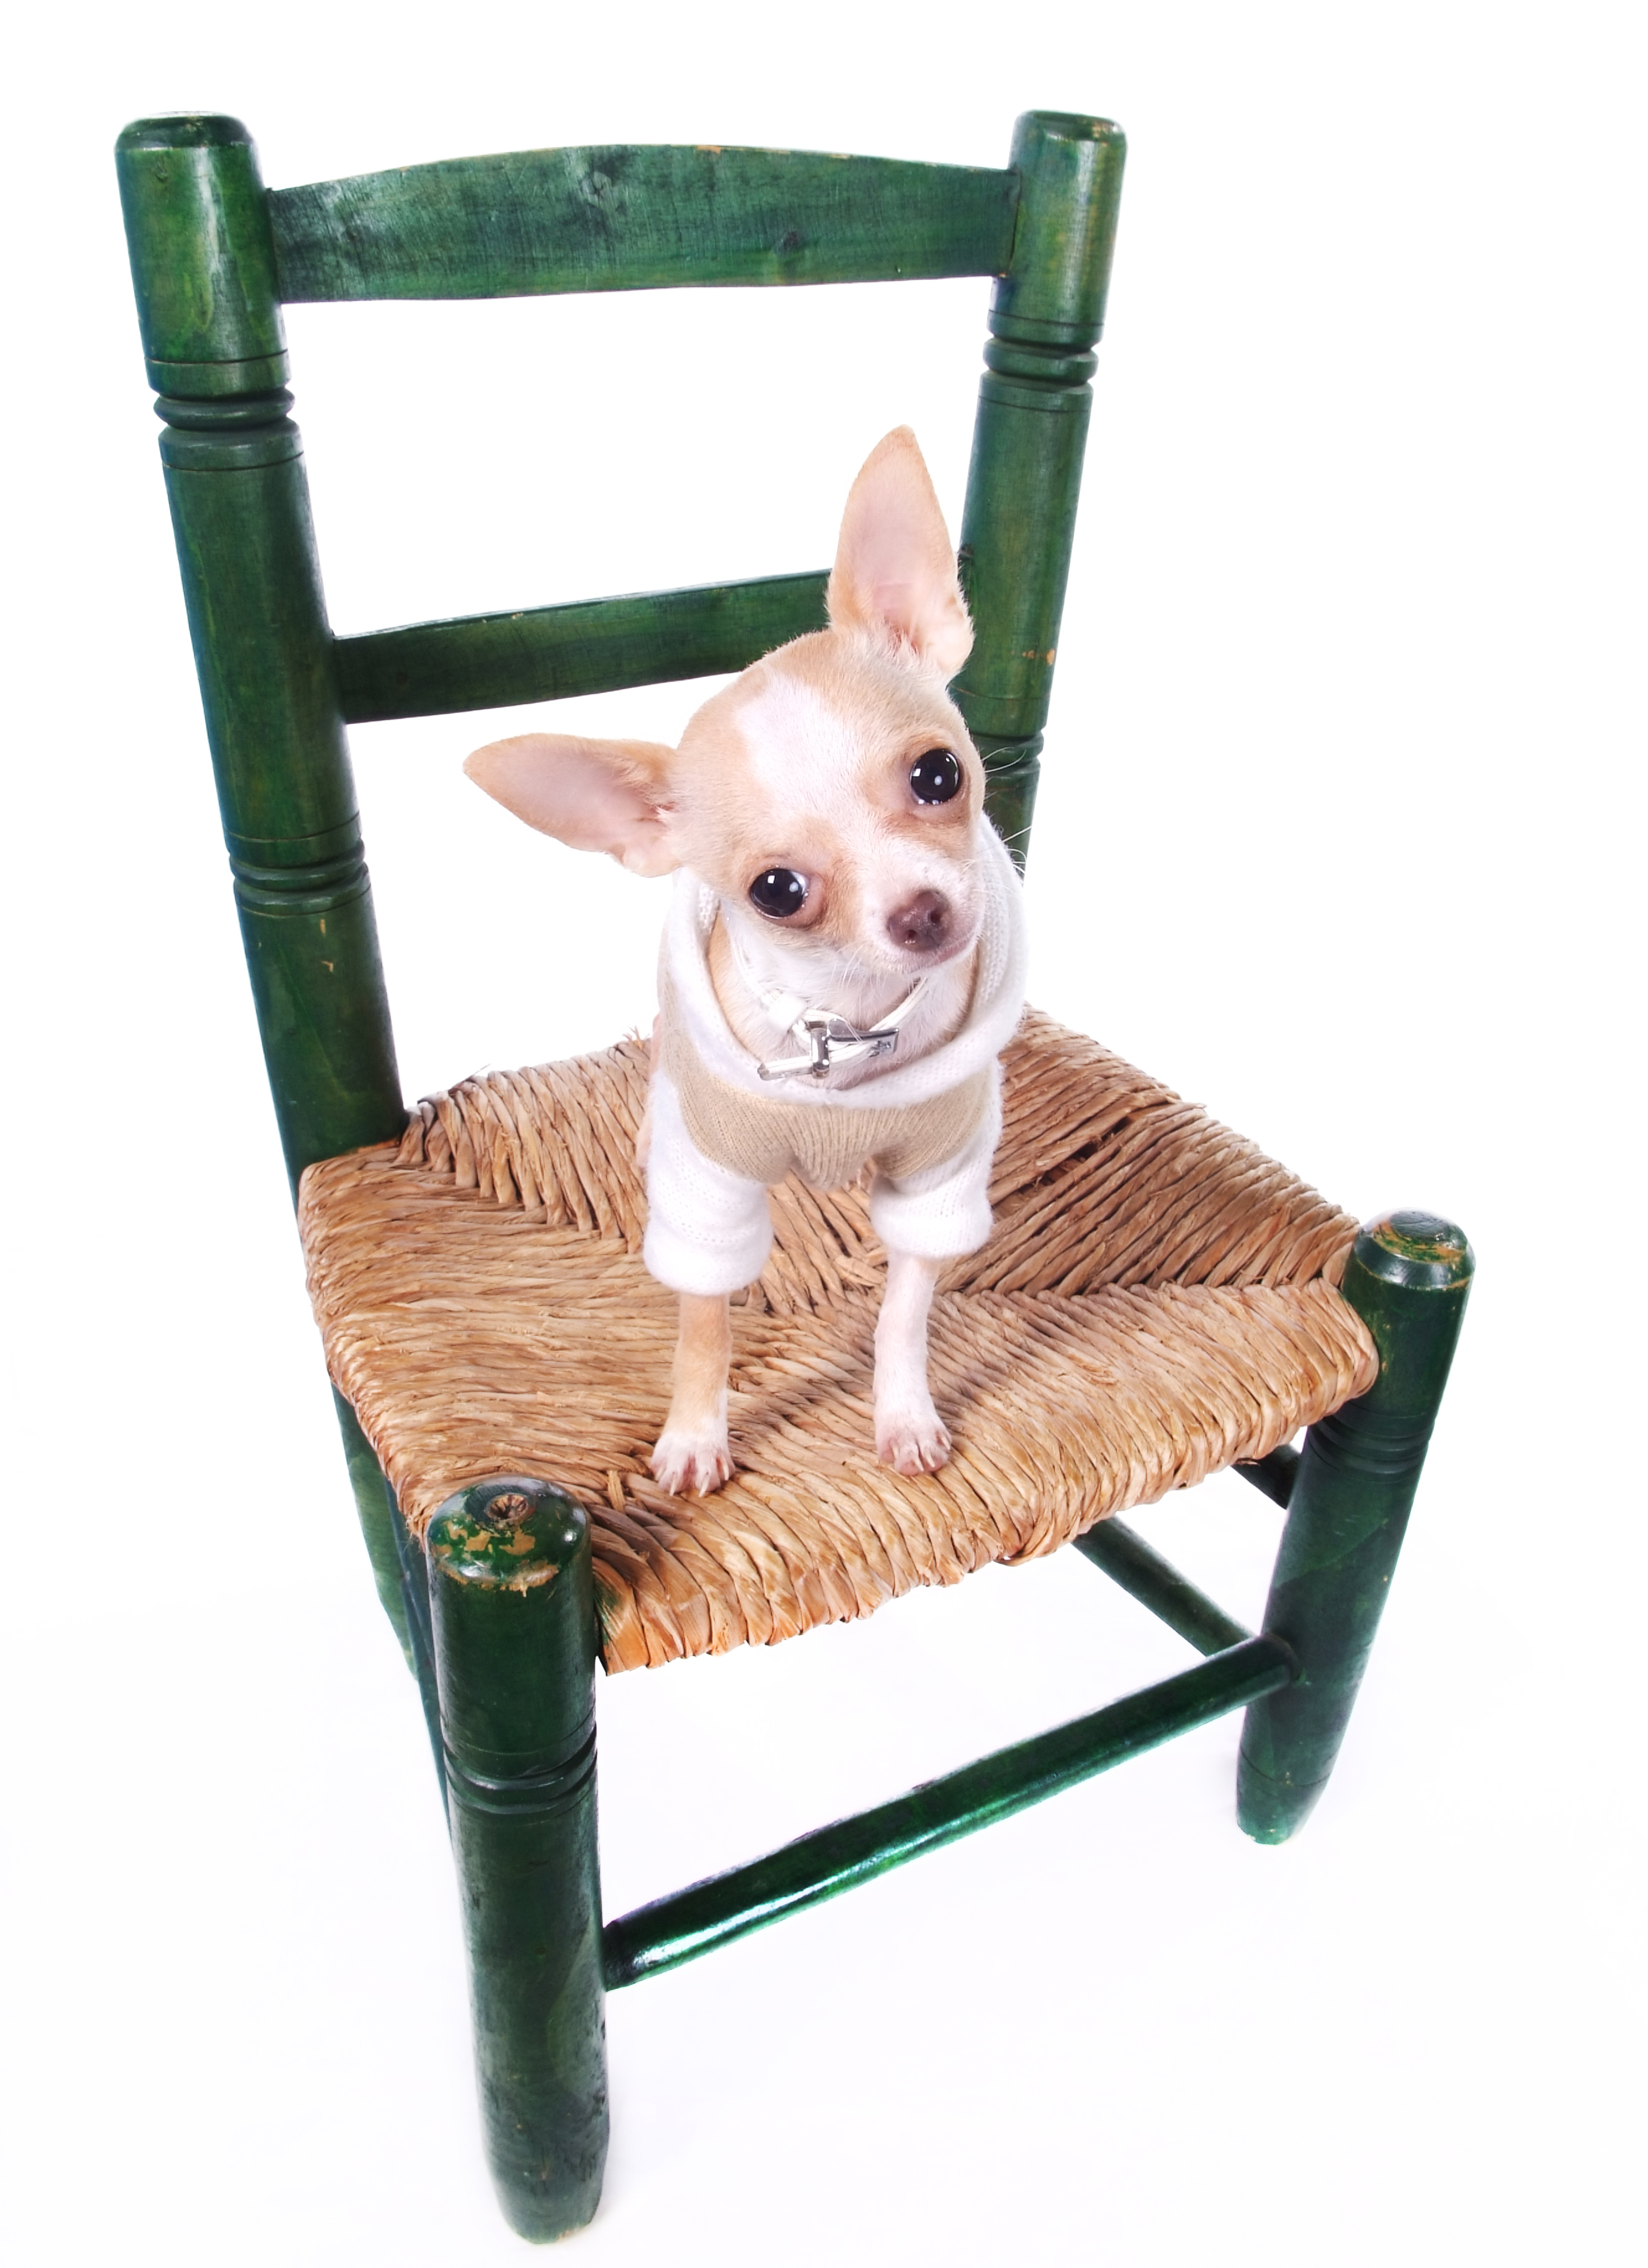 Chihuahua dog sitting on chair photo